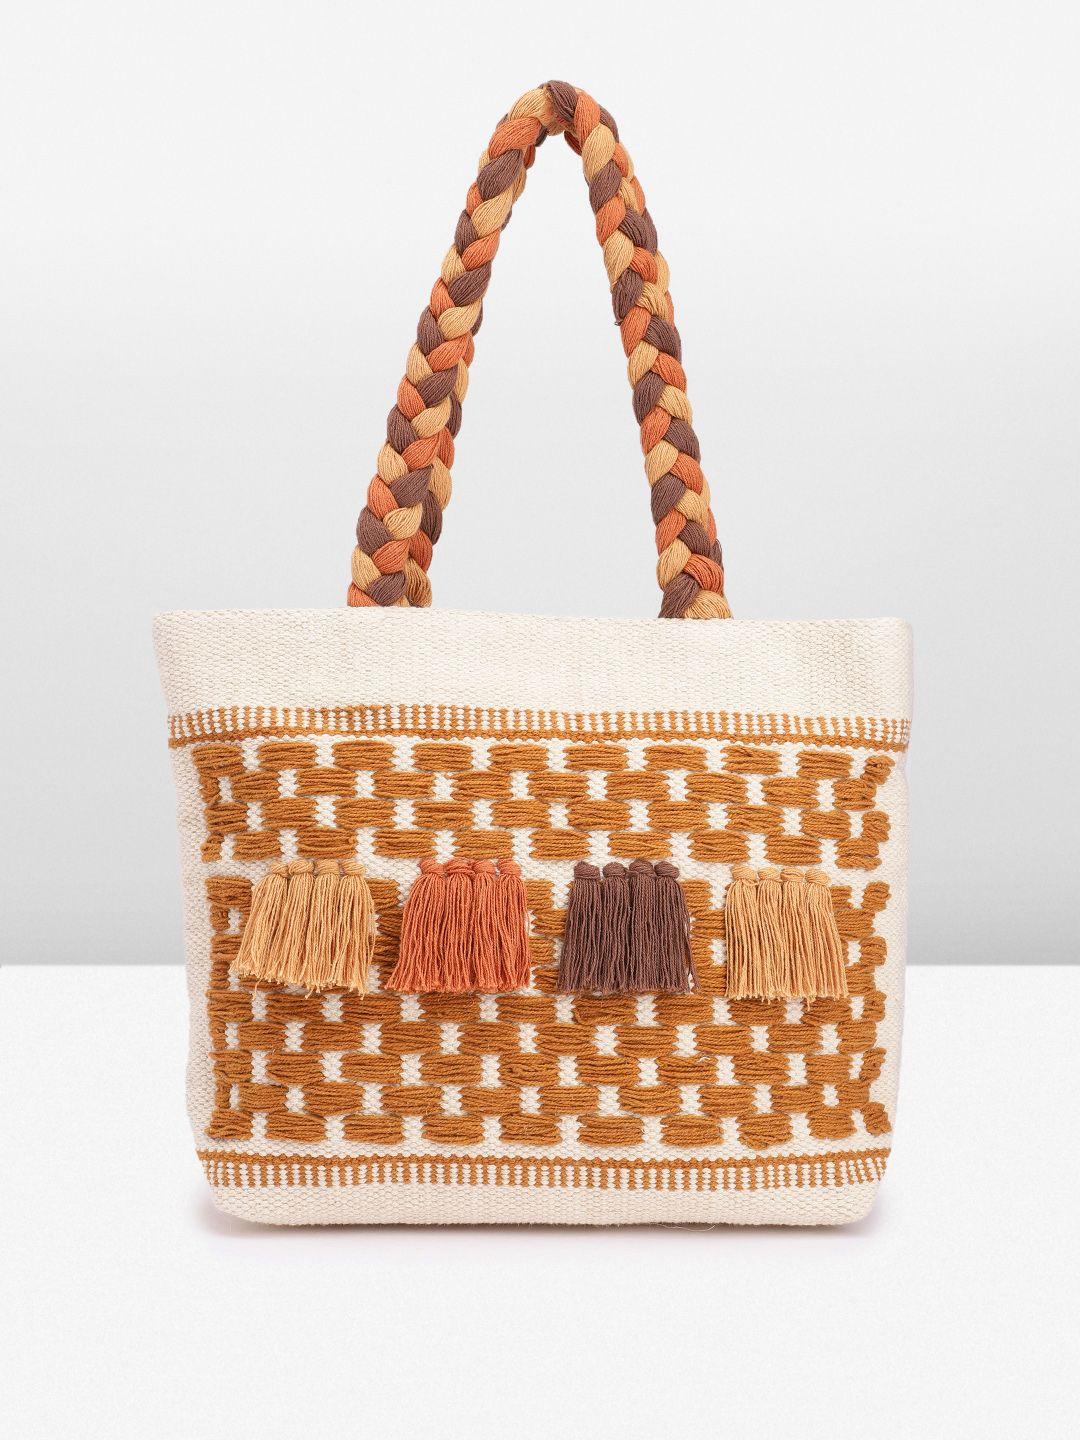 taavi woven design textured shoulder bag with tasselled